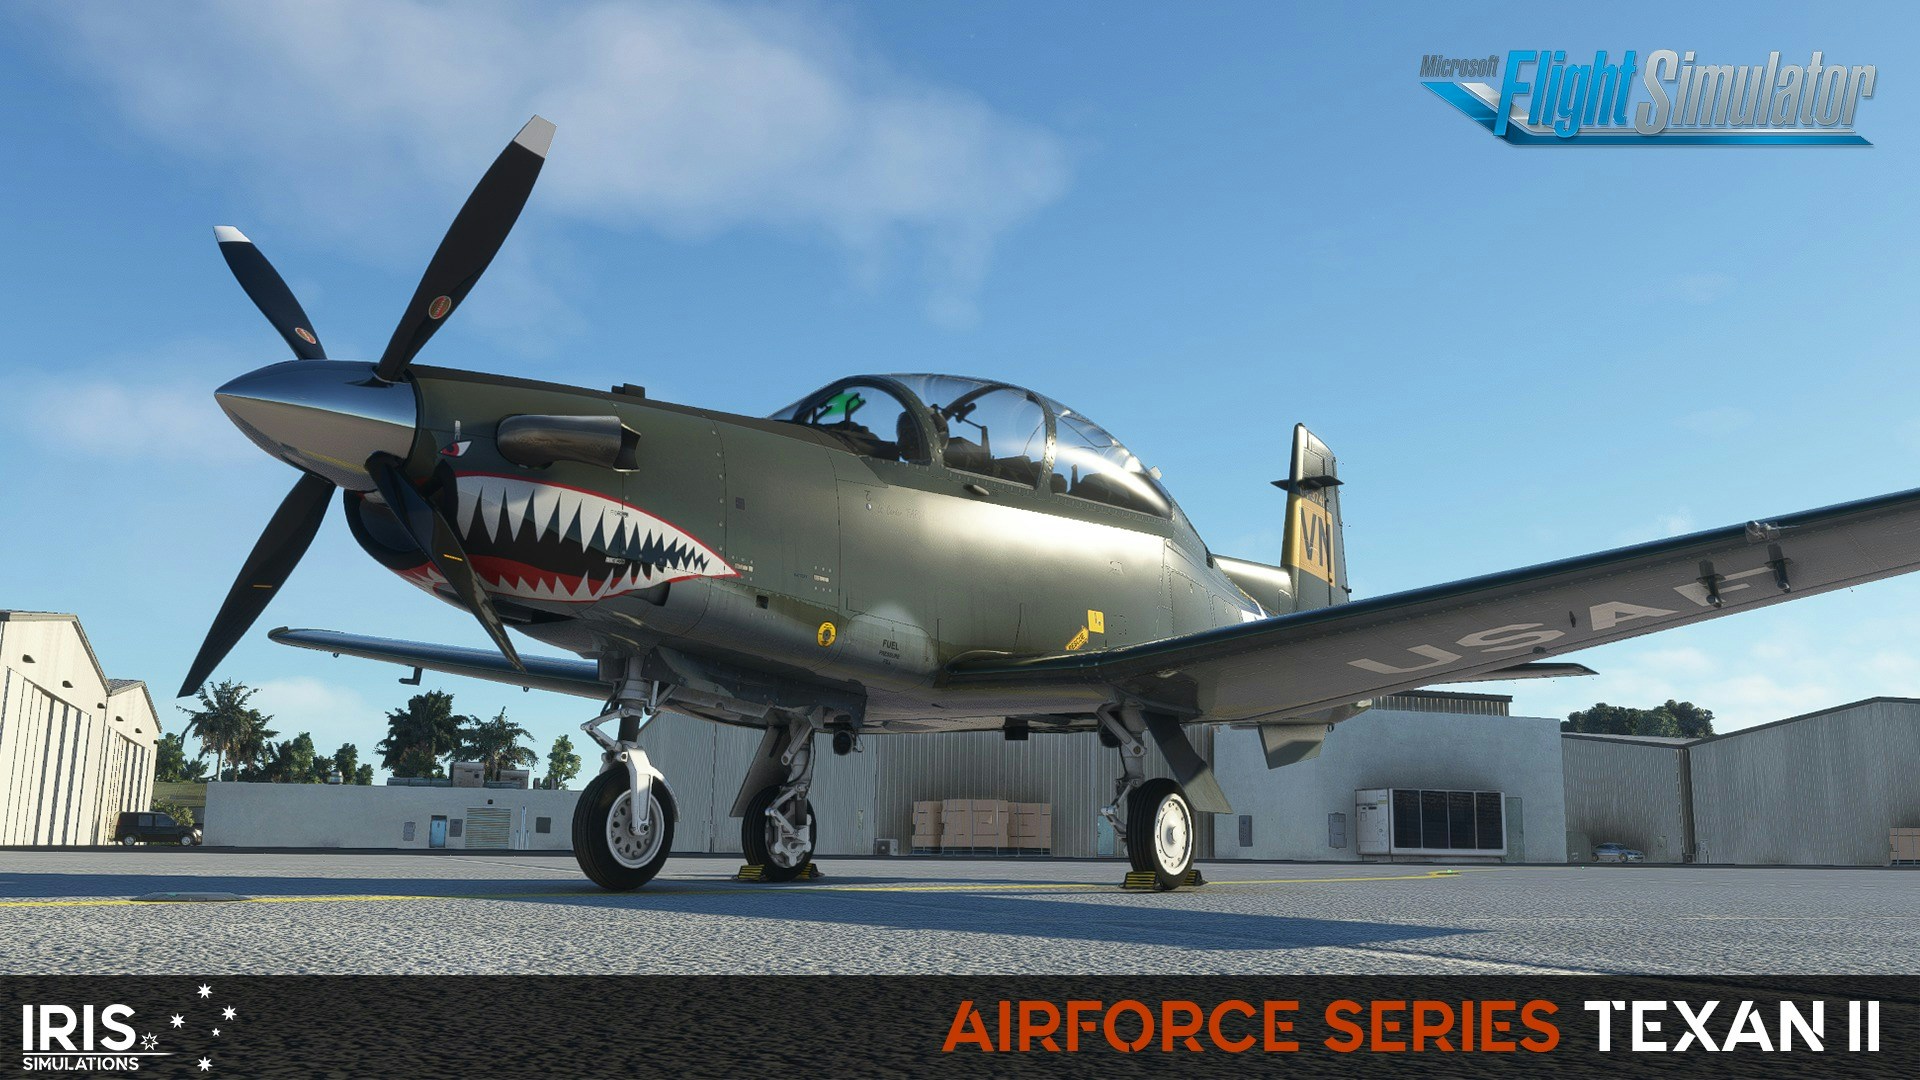 IRIS Simulations Releases Beechcraft T-6 Texan II for MSFS